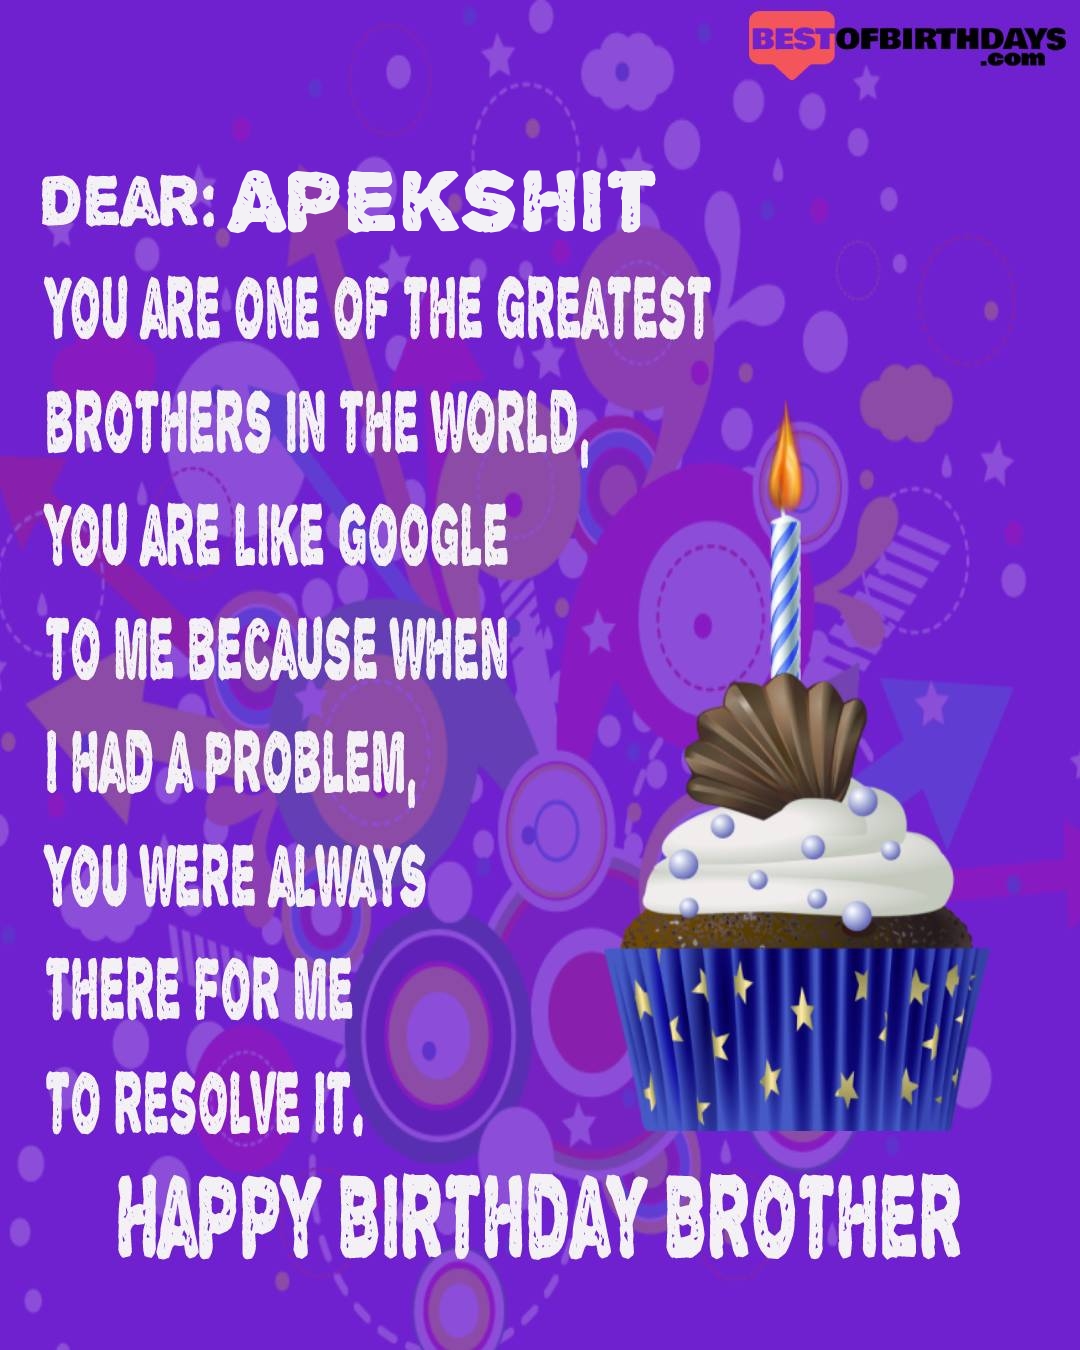 Happy birthday apekshit bhai brother bro